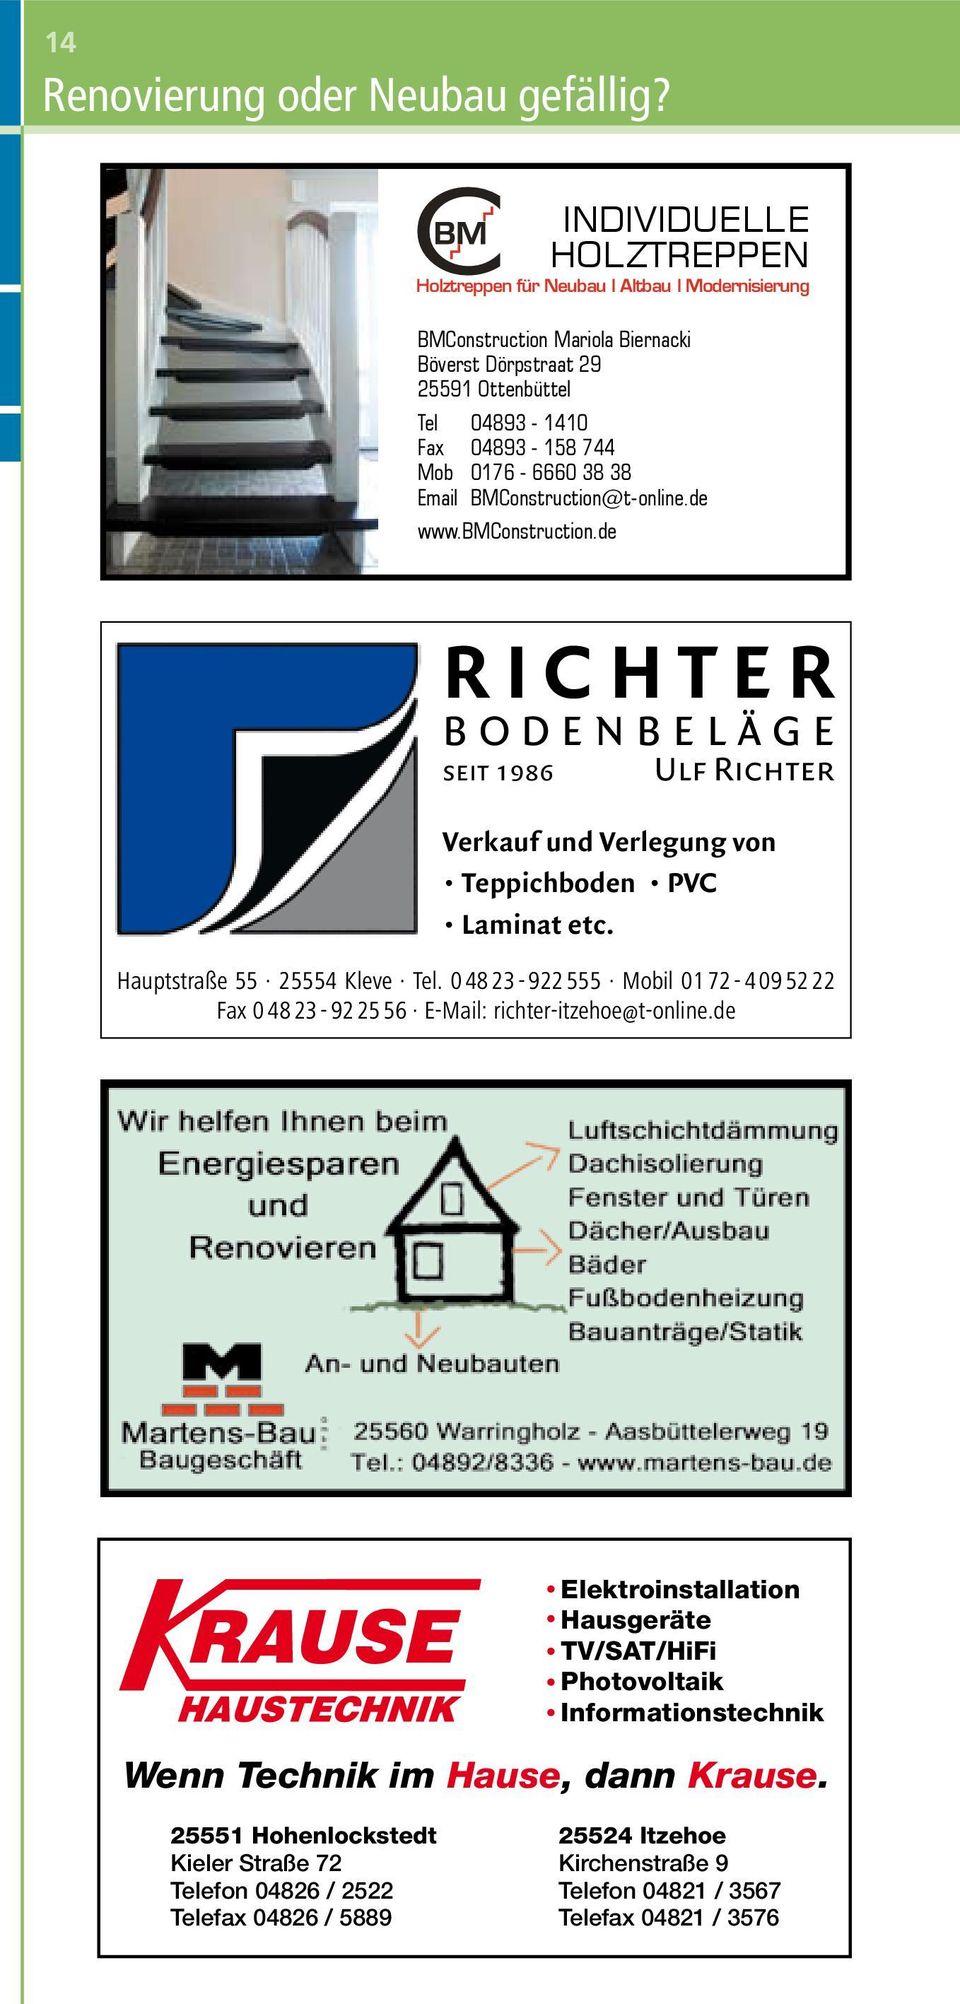 25591 Ottenbüttel Tel 04893-1410 Fax 04893-158 744 Mob 0176-6660 38 38 Email BMConstruction@t-online.de www.bmconstruction.